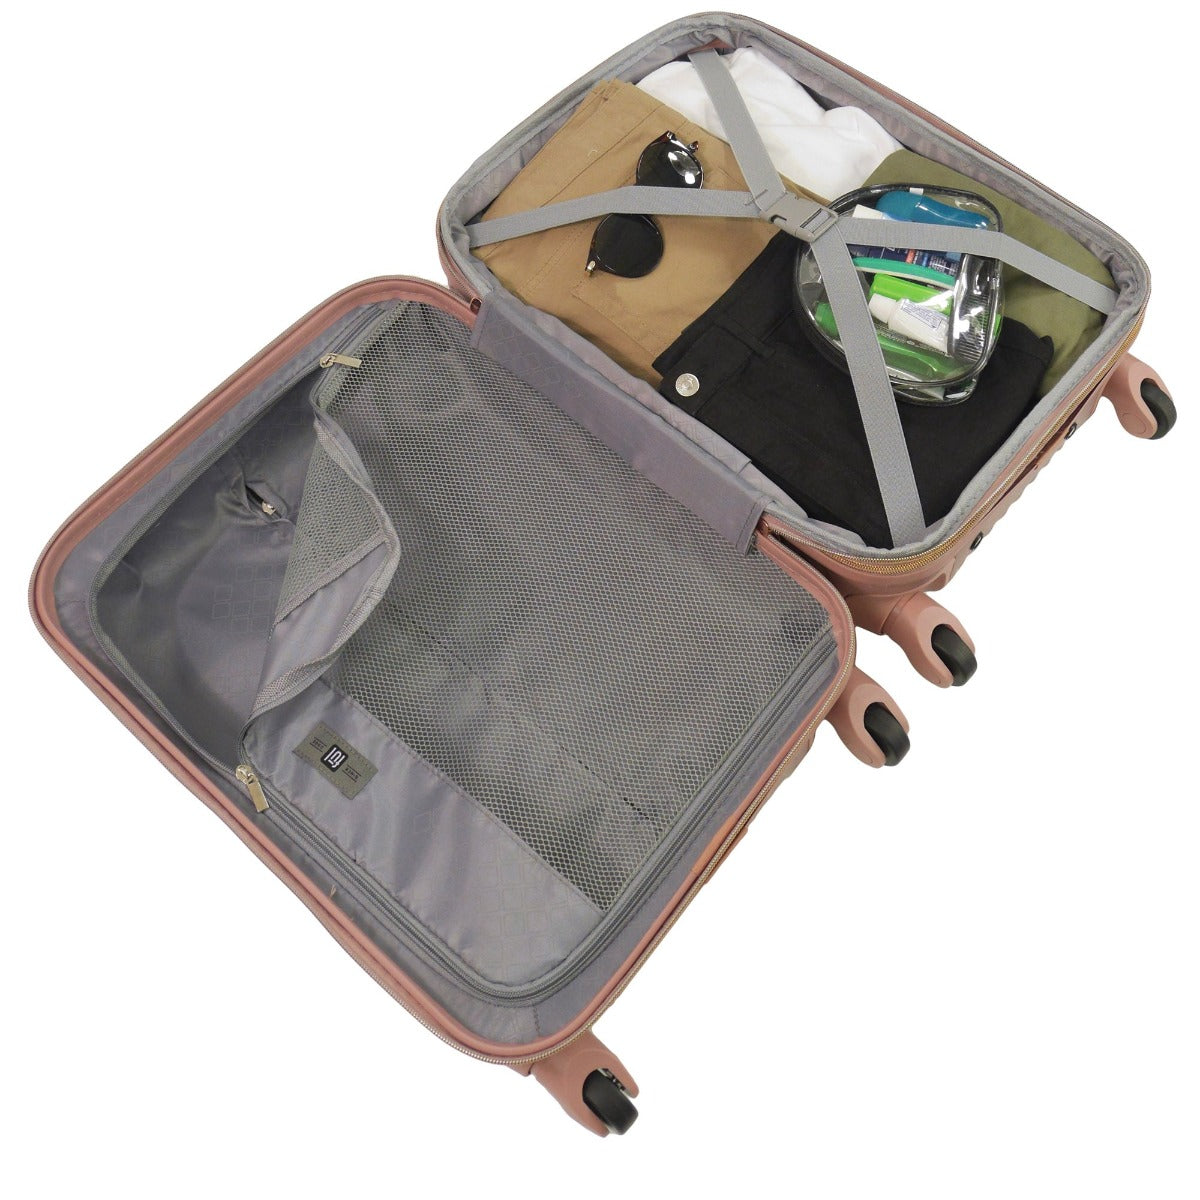 Ful Geo hard sided spinner suitcase luggage set rose gold